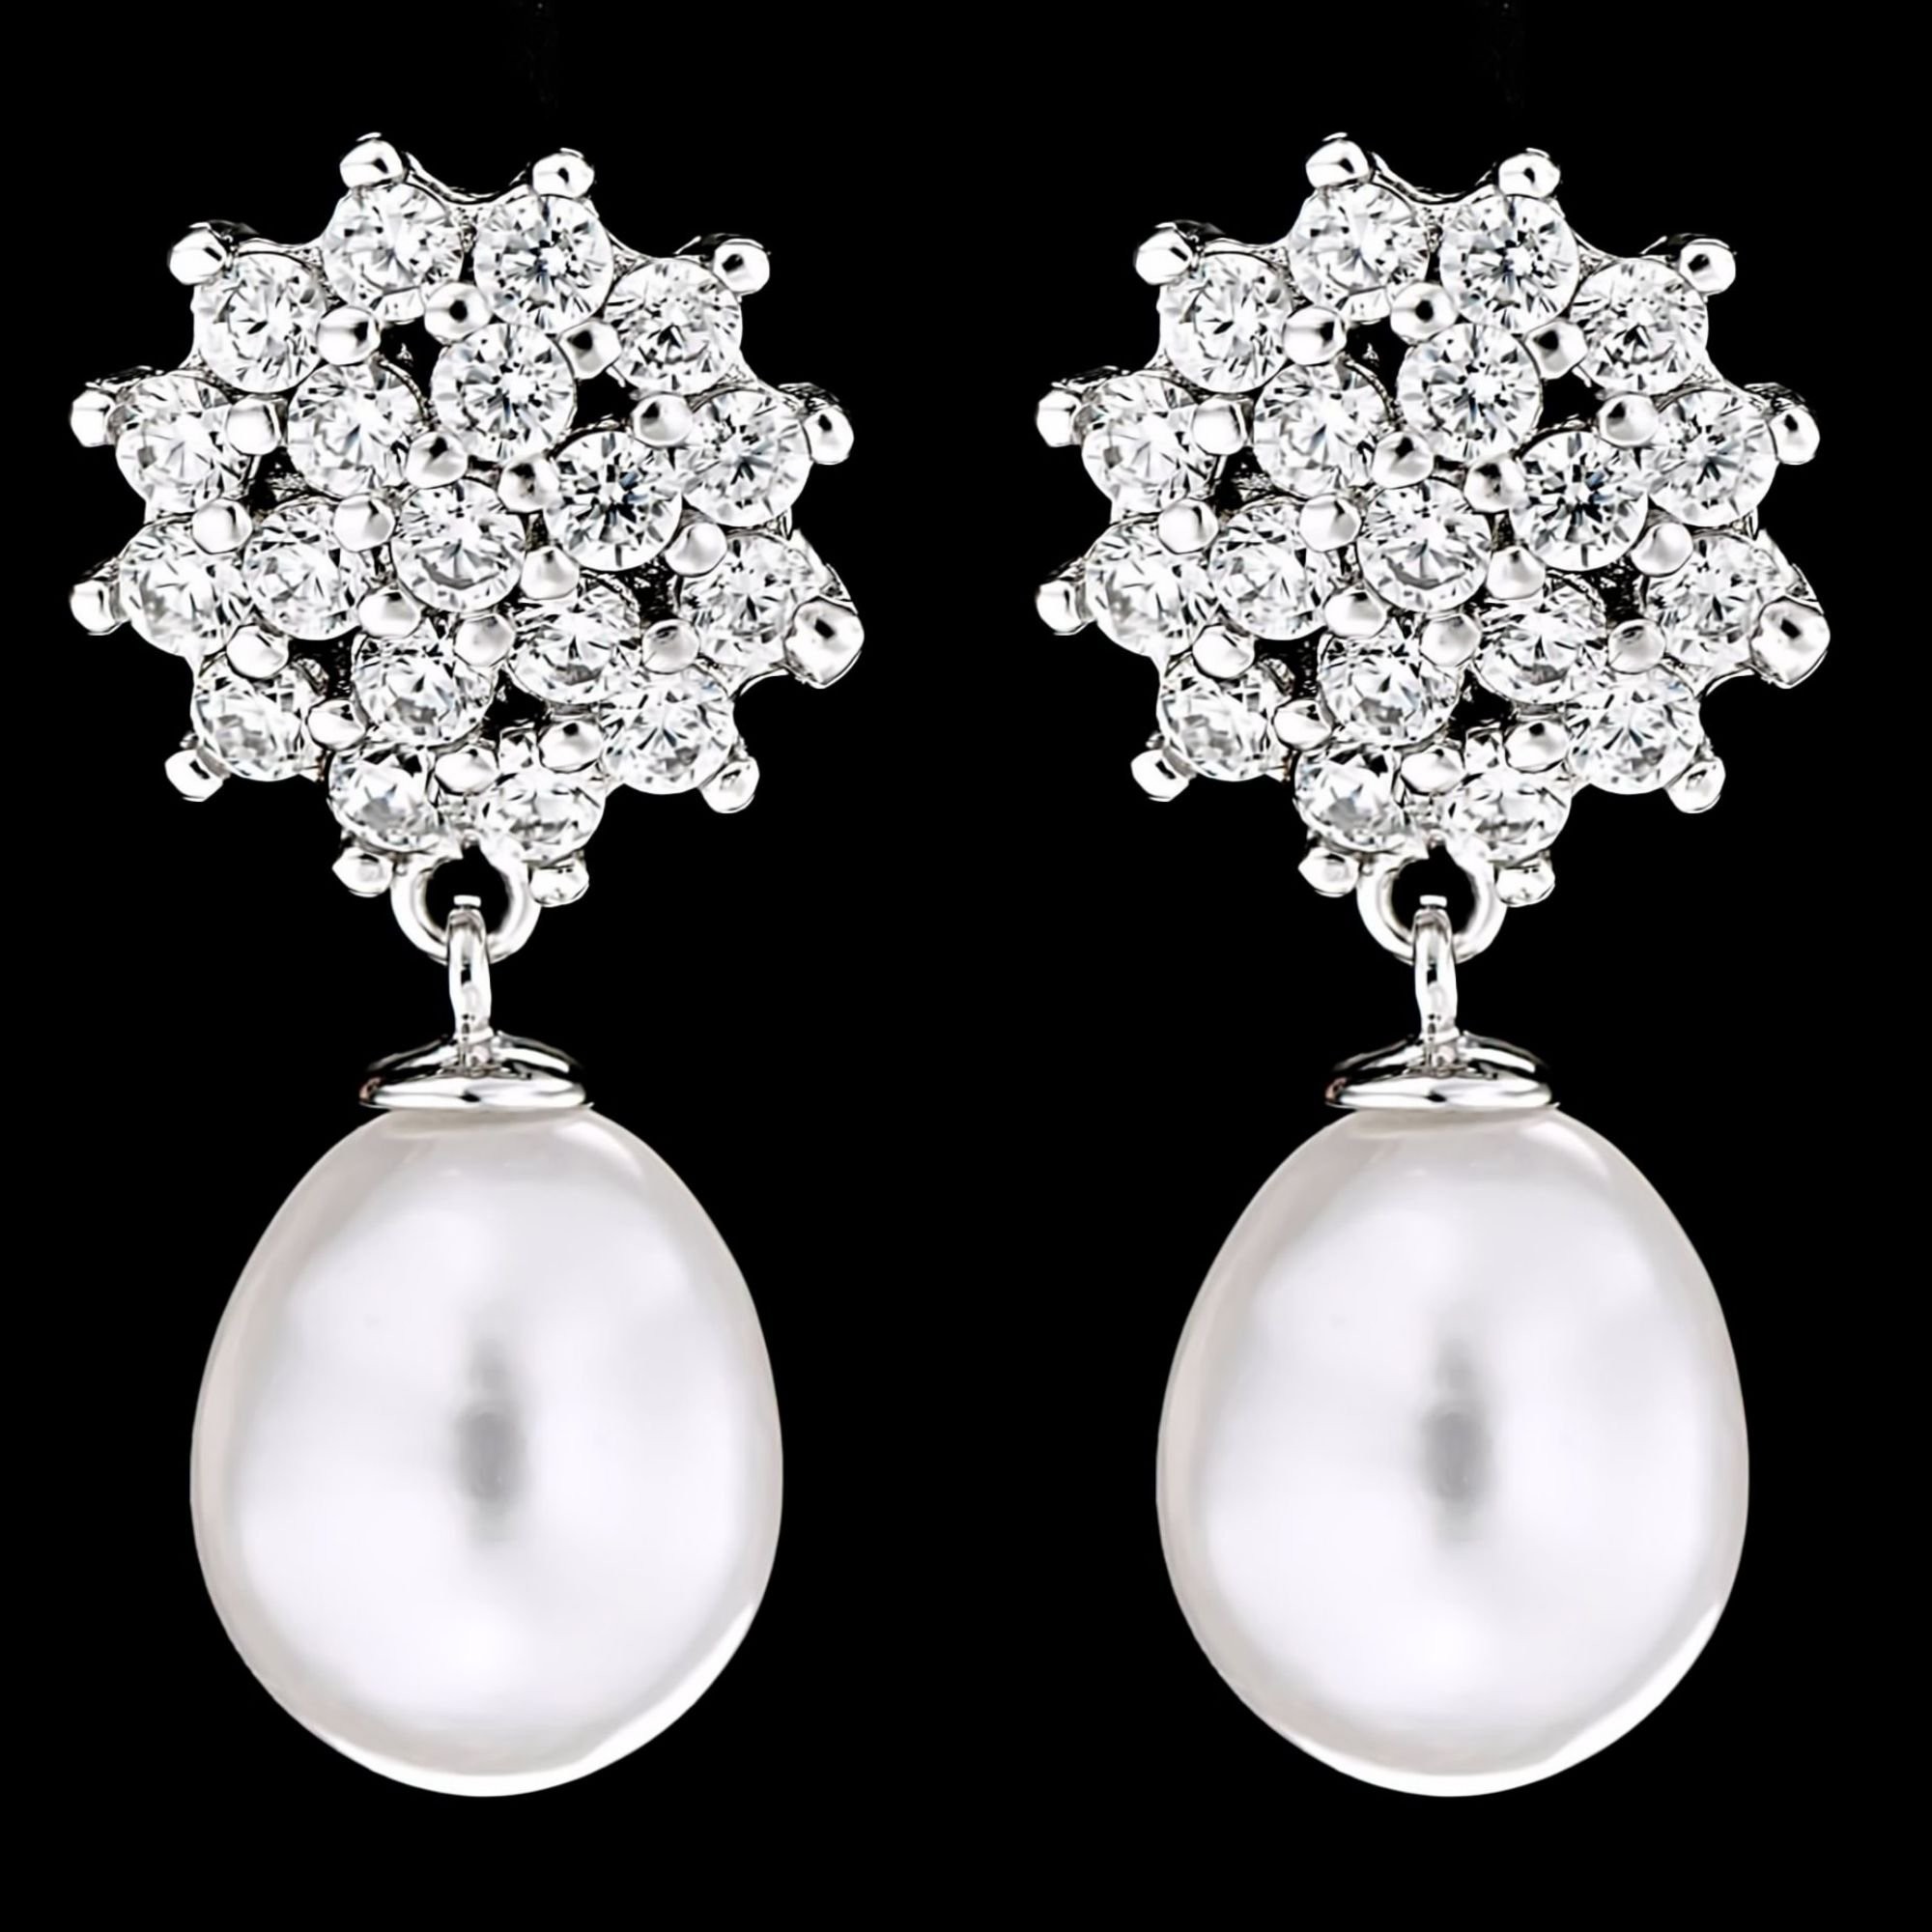 Ritual Asian congestion Cercei din Argint 925 cu Perle Naturale si Diamante, Ambra - Iris Boutique  - Haine Blana si Bijuterii